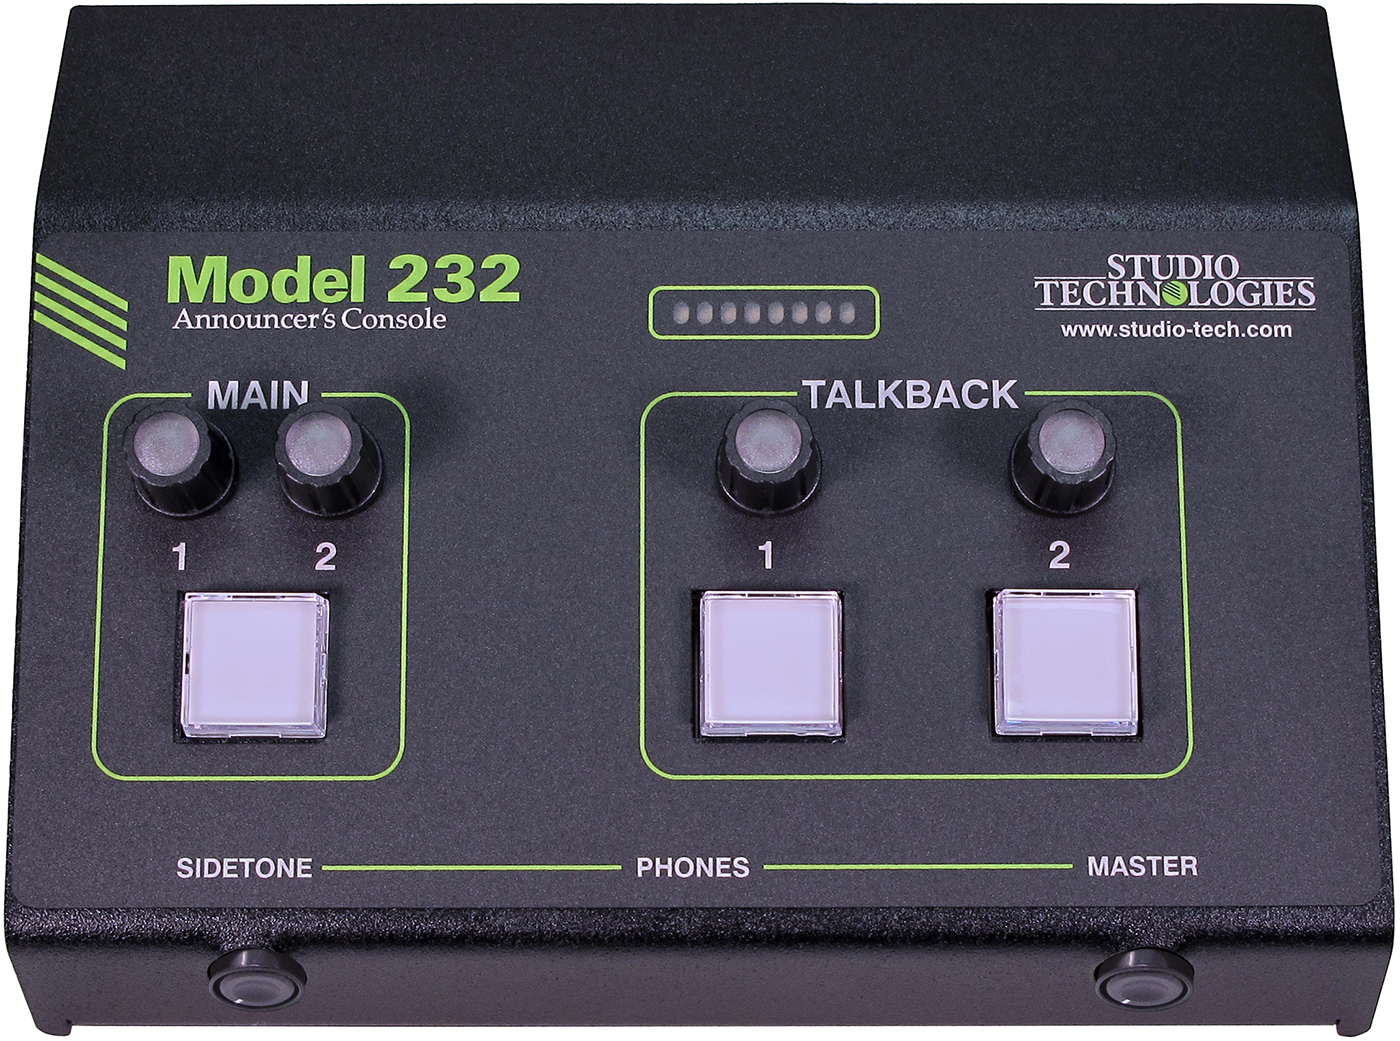 Model 232 Announcer’s Console